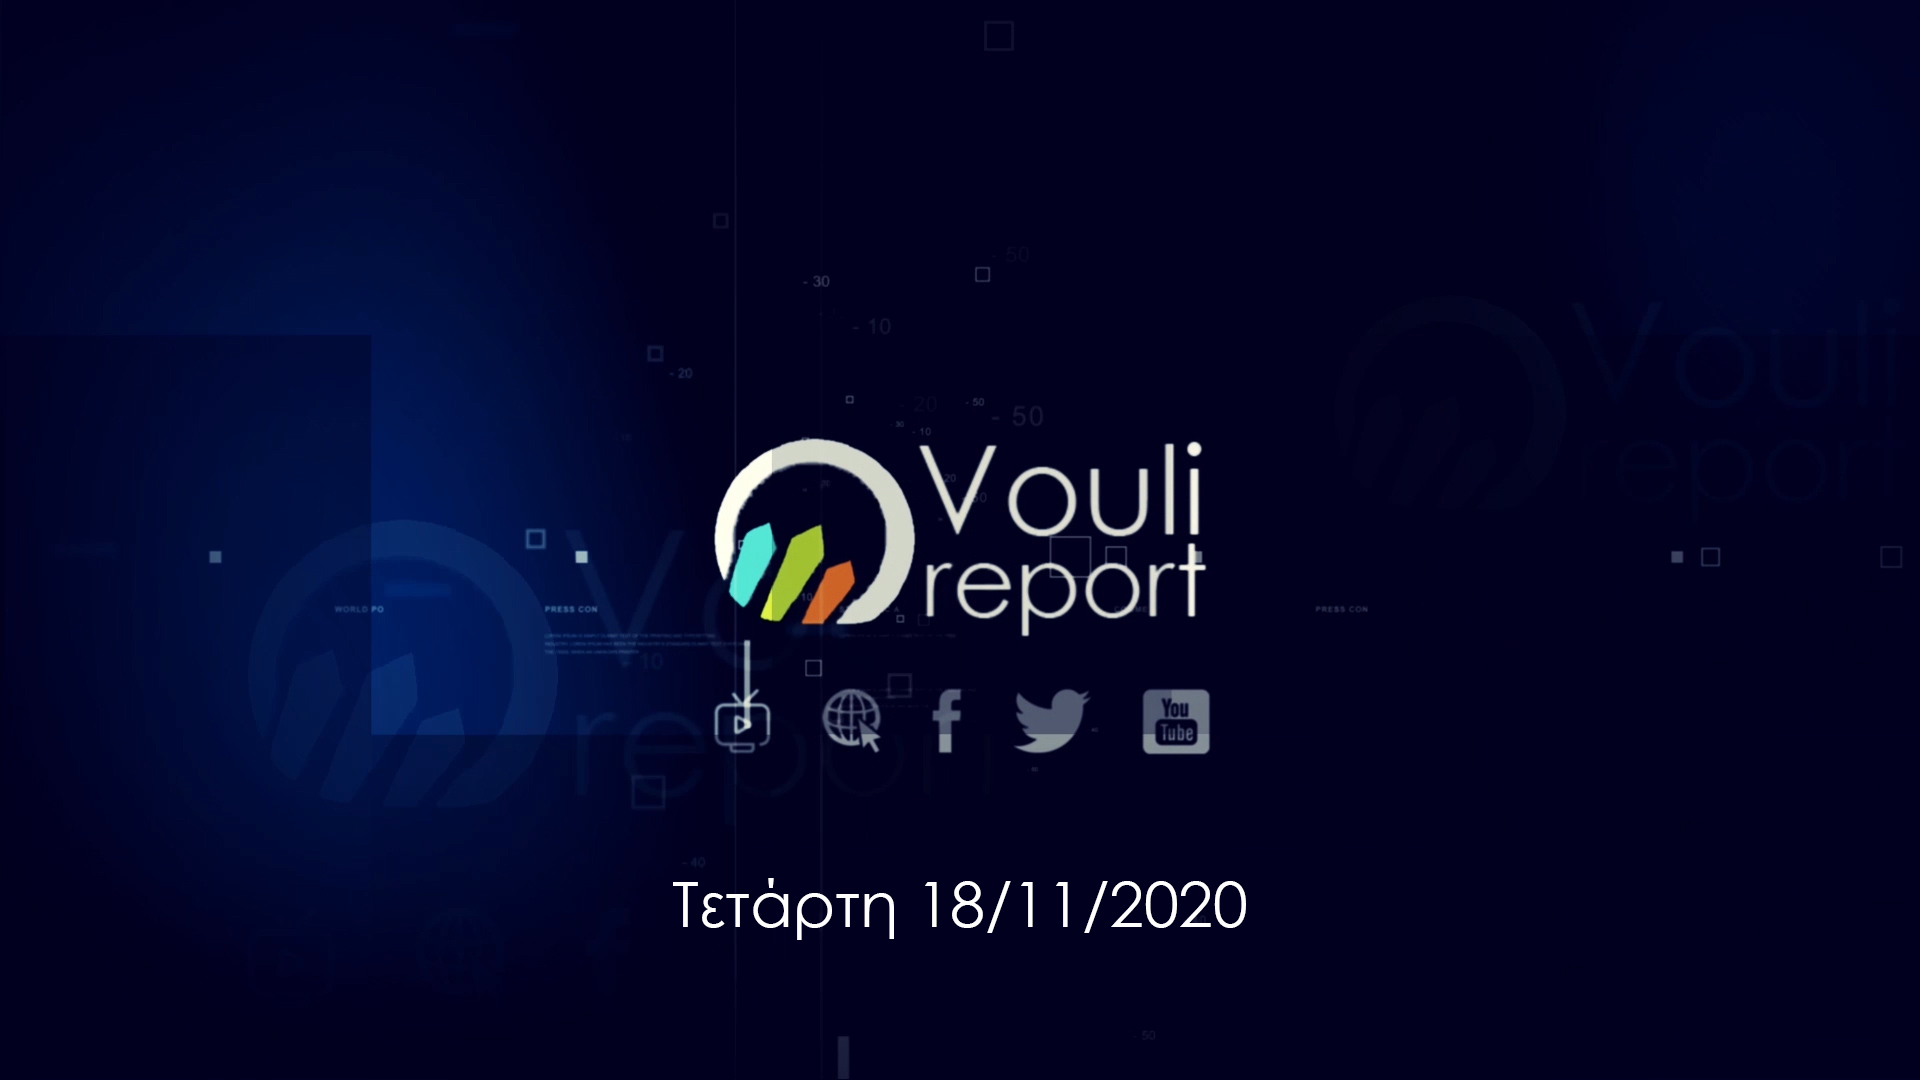 Vouli report | 18/11/2020